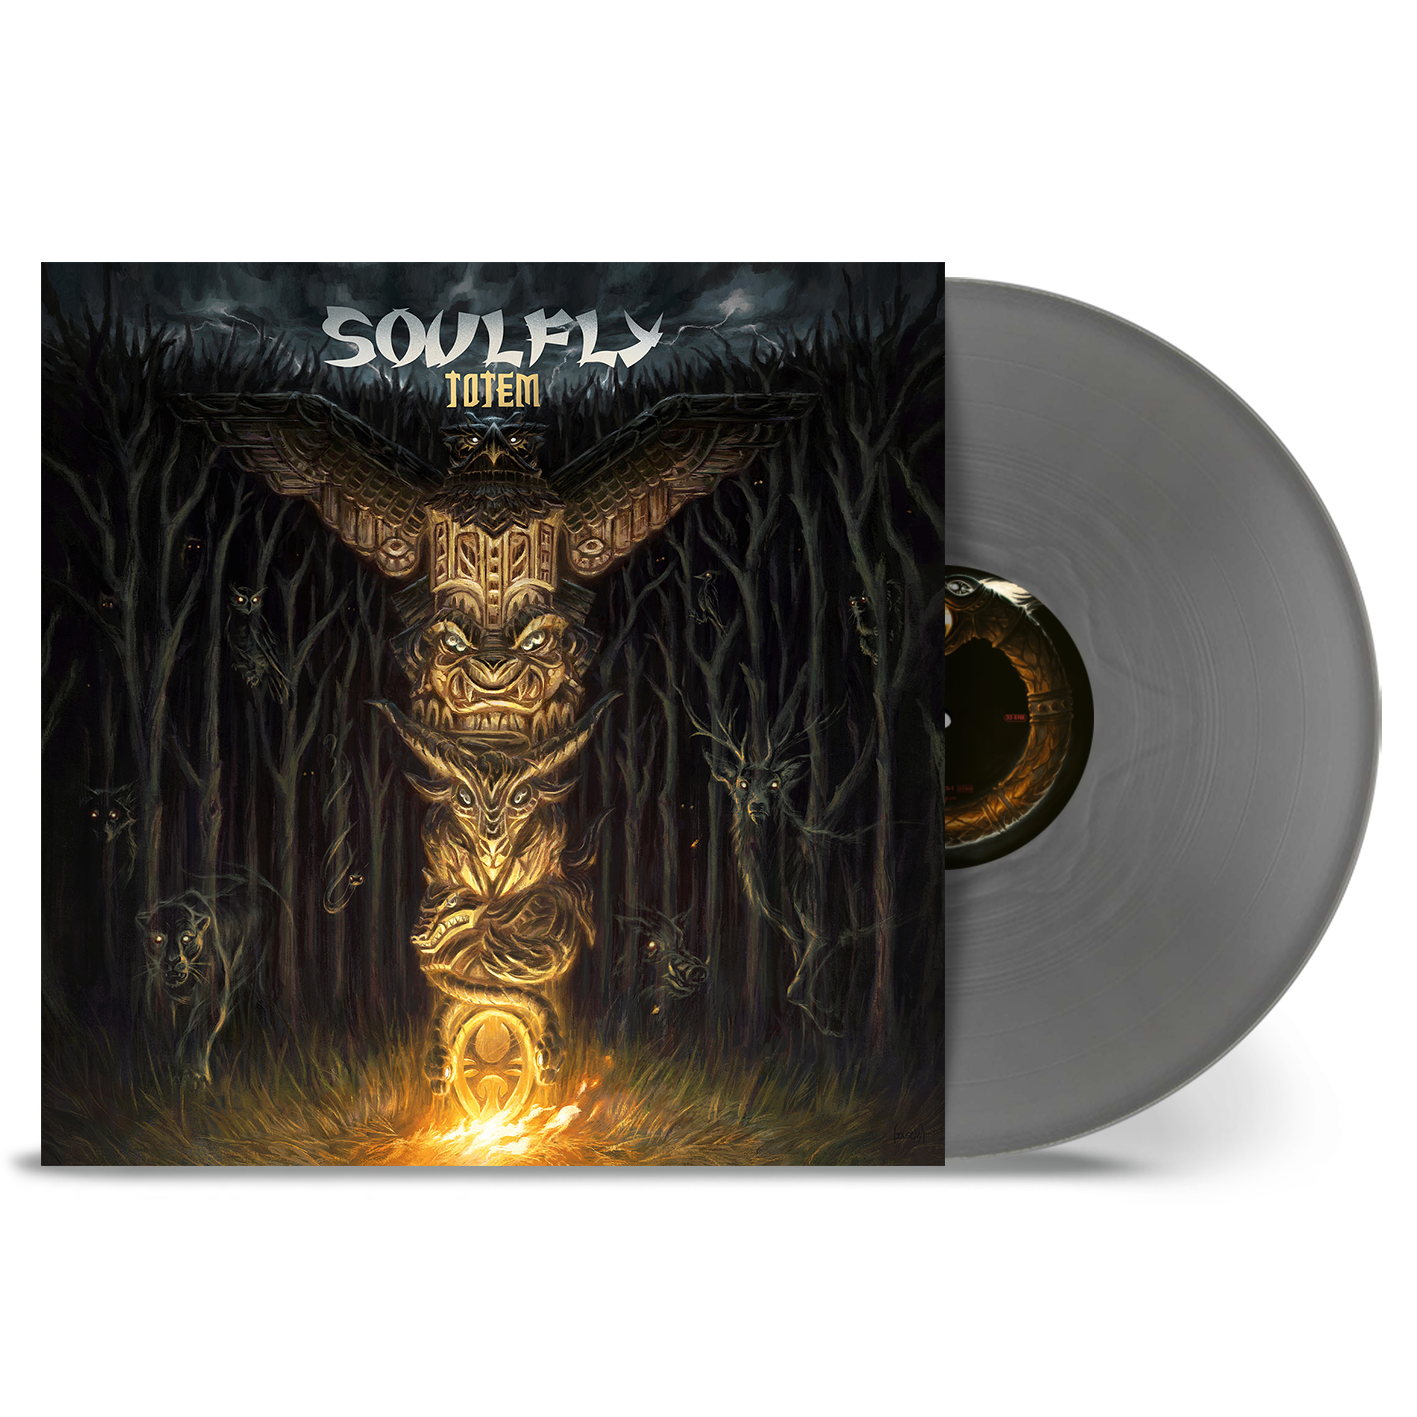 Soulfly - Totem: Limited Silver Colour Vinyl LP